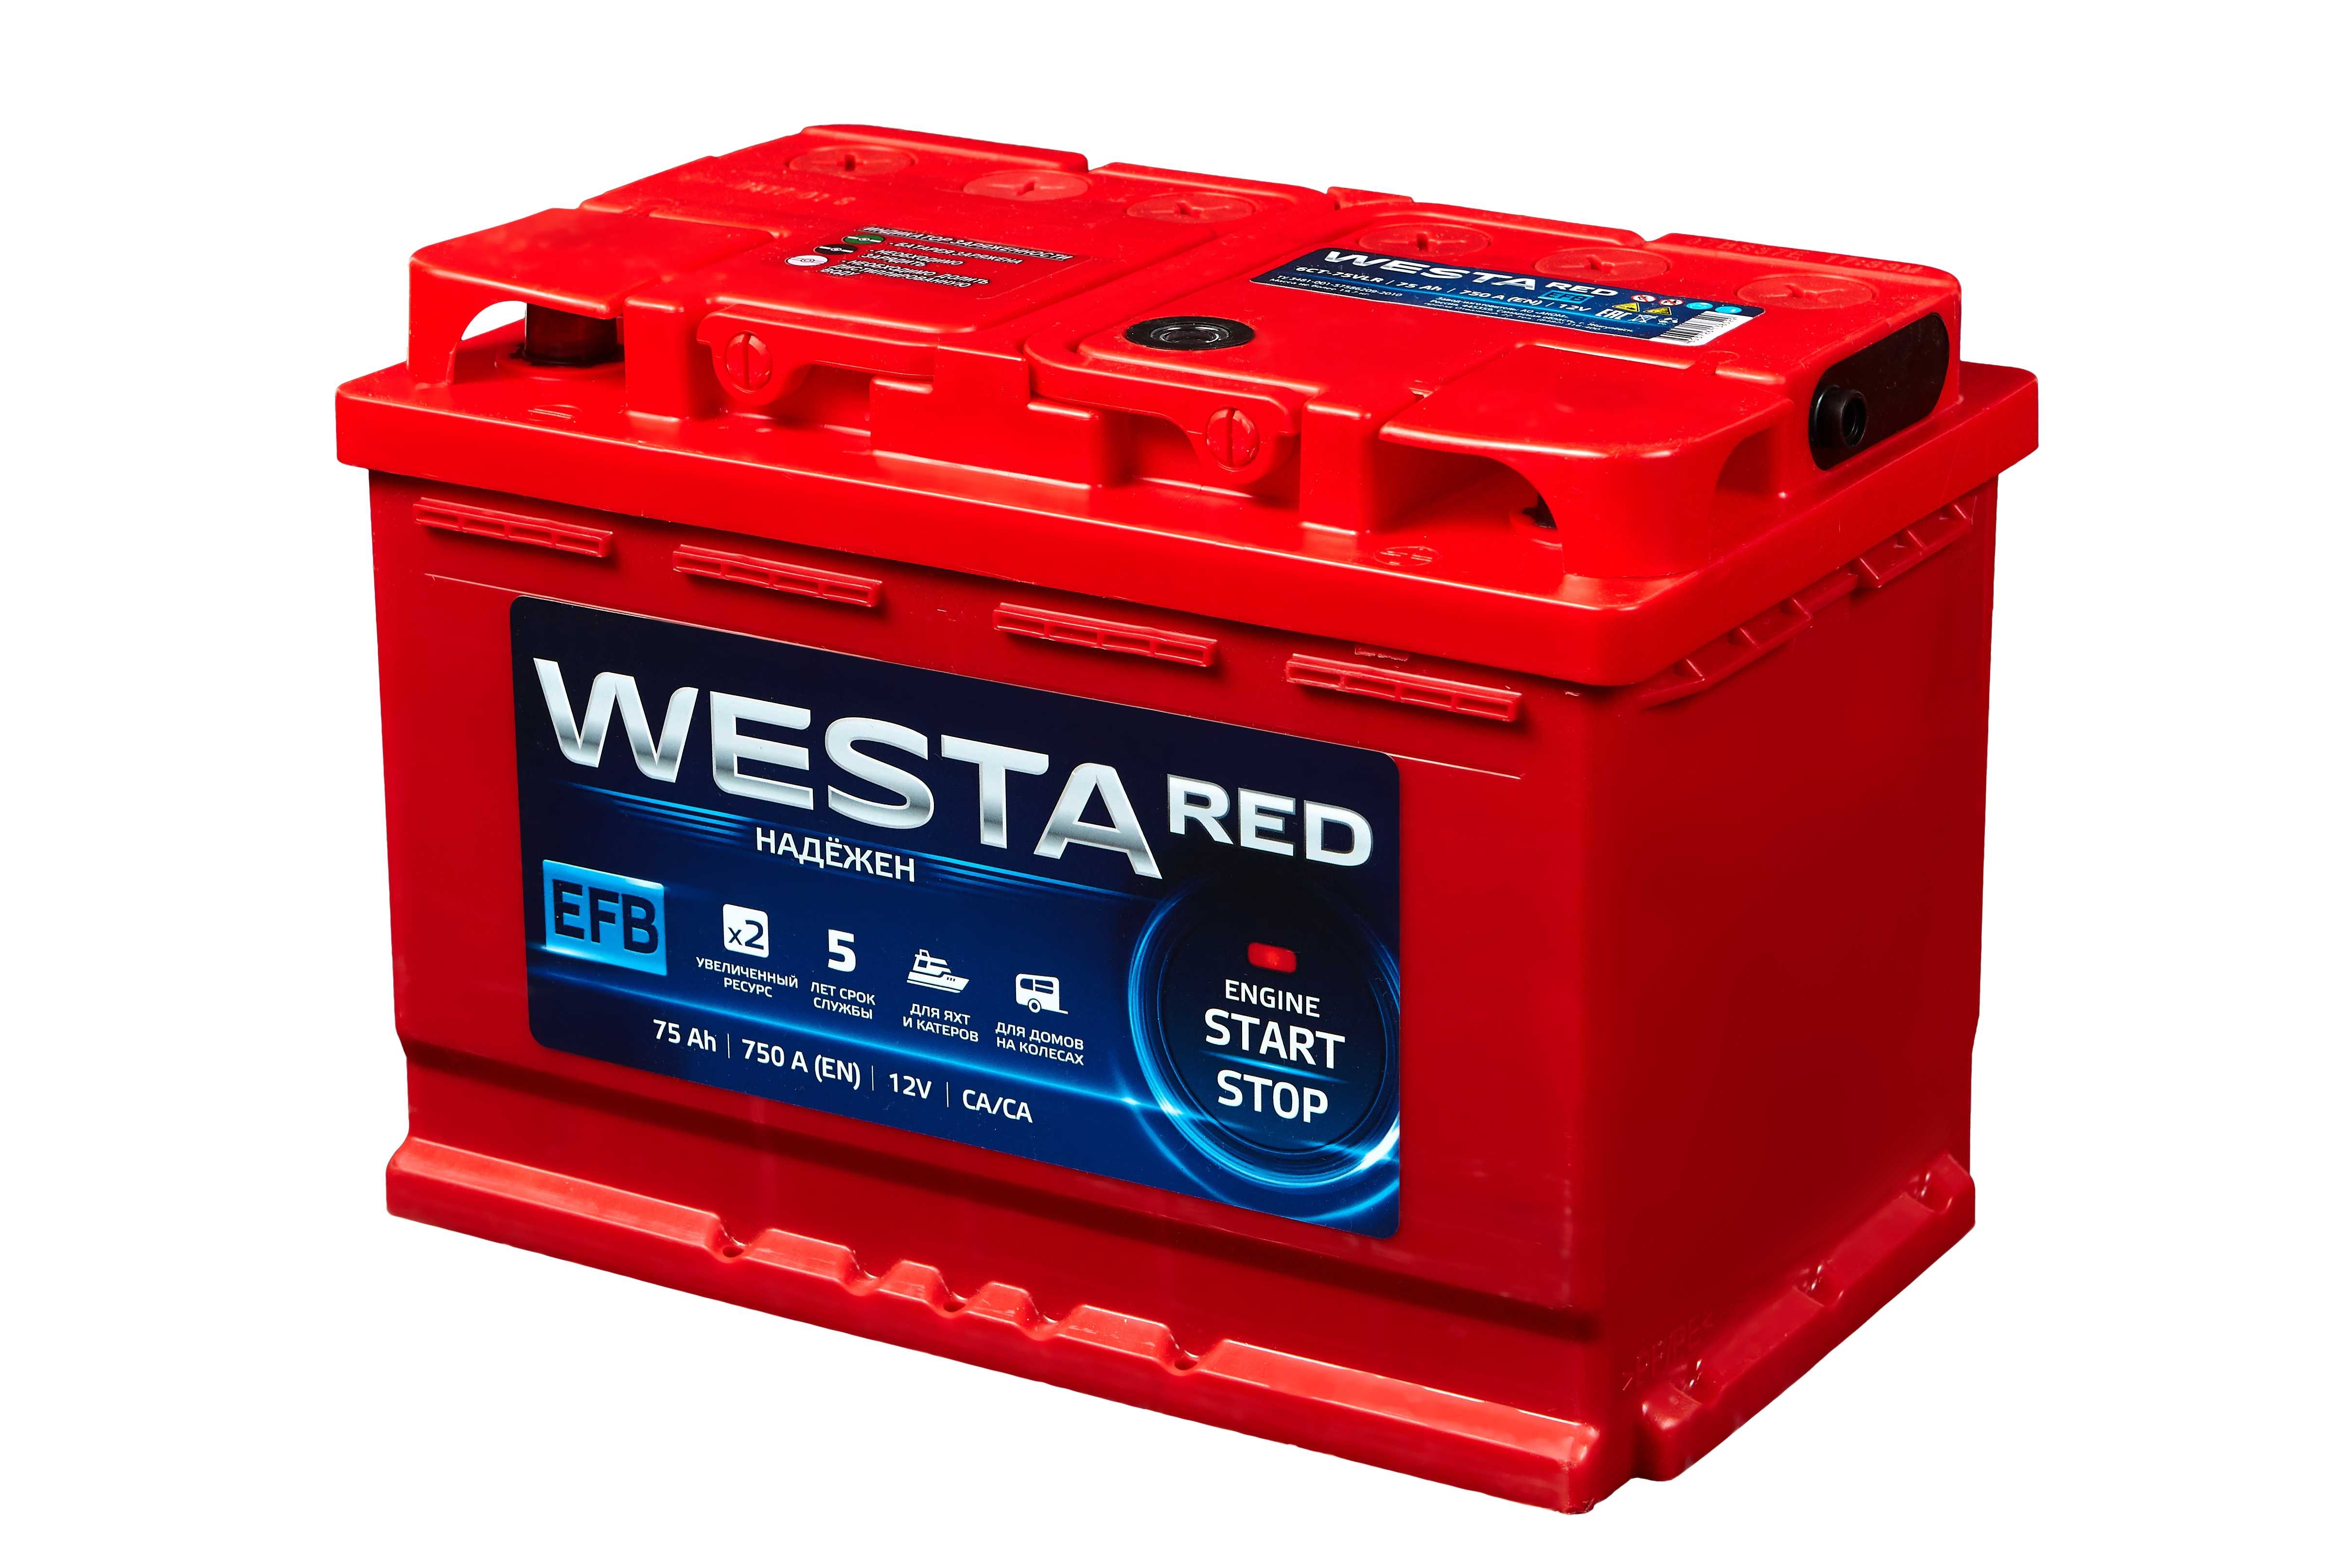 Русские аккумуляторы автомобильные. Westa Red 60 a, 640 a, 6 CT -60. Westa Red аккумулятор разбор. ТОО "Кайнар-АКБ" Vesta Red 77ah.